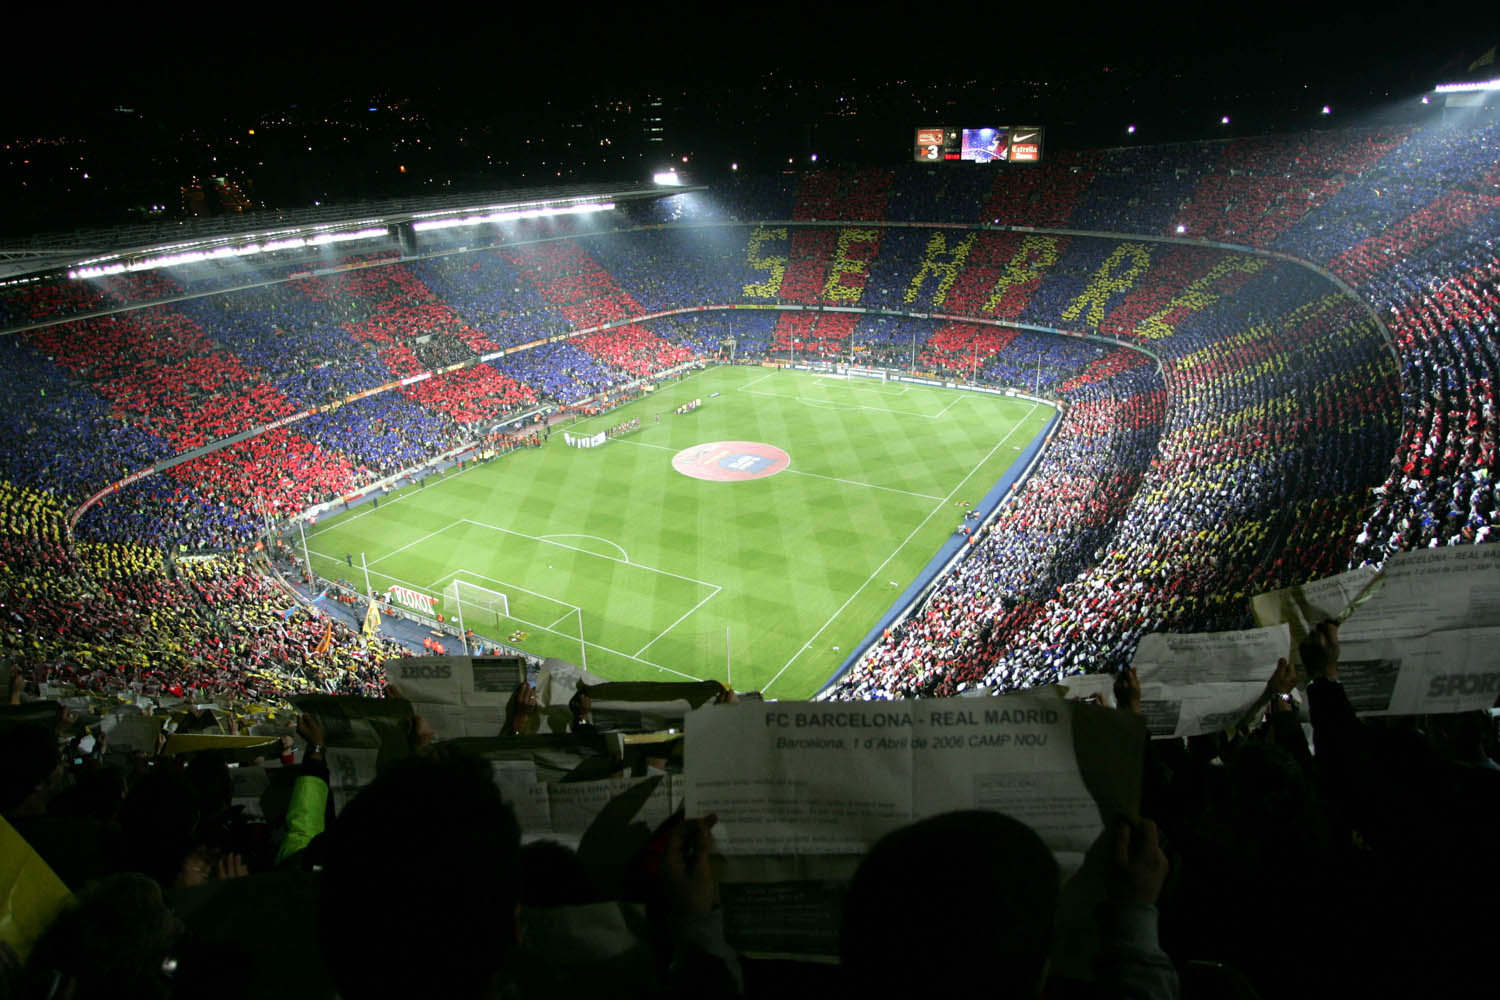 Camp Nou Barca